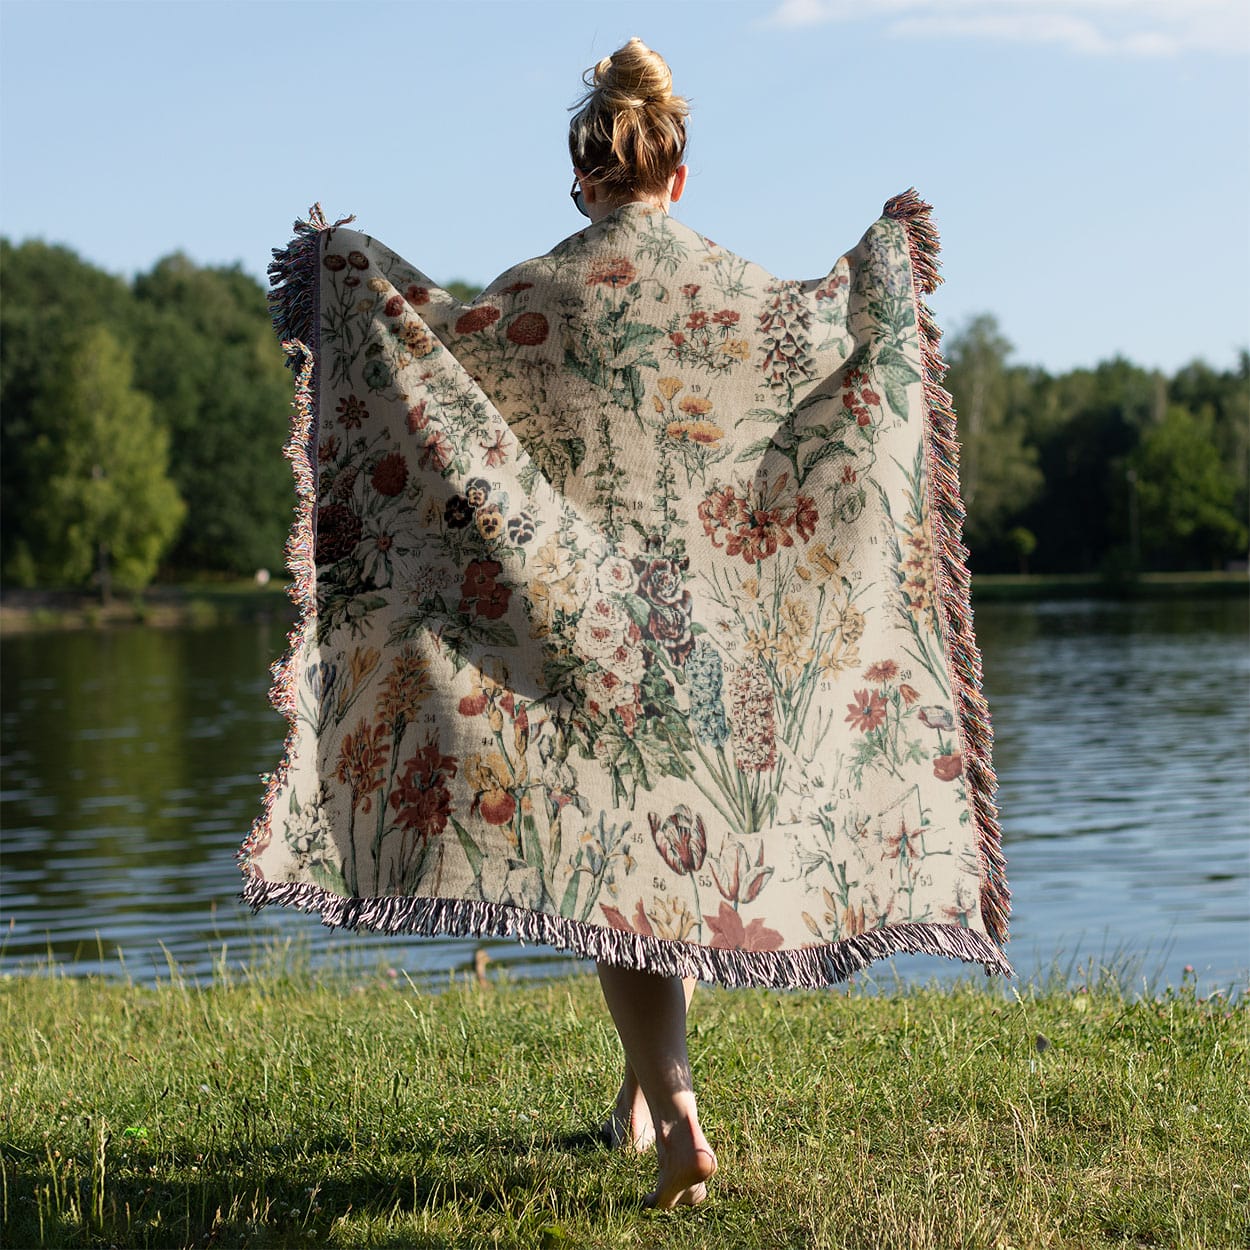 Wildflower Woven Blanket Held on a Woman's Back Outside